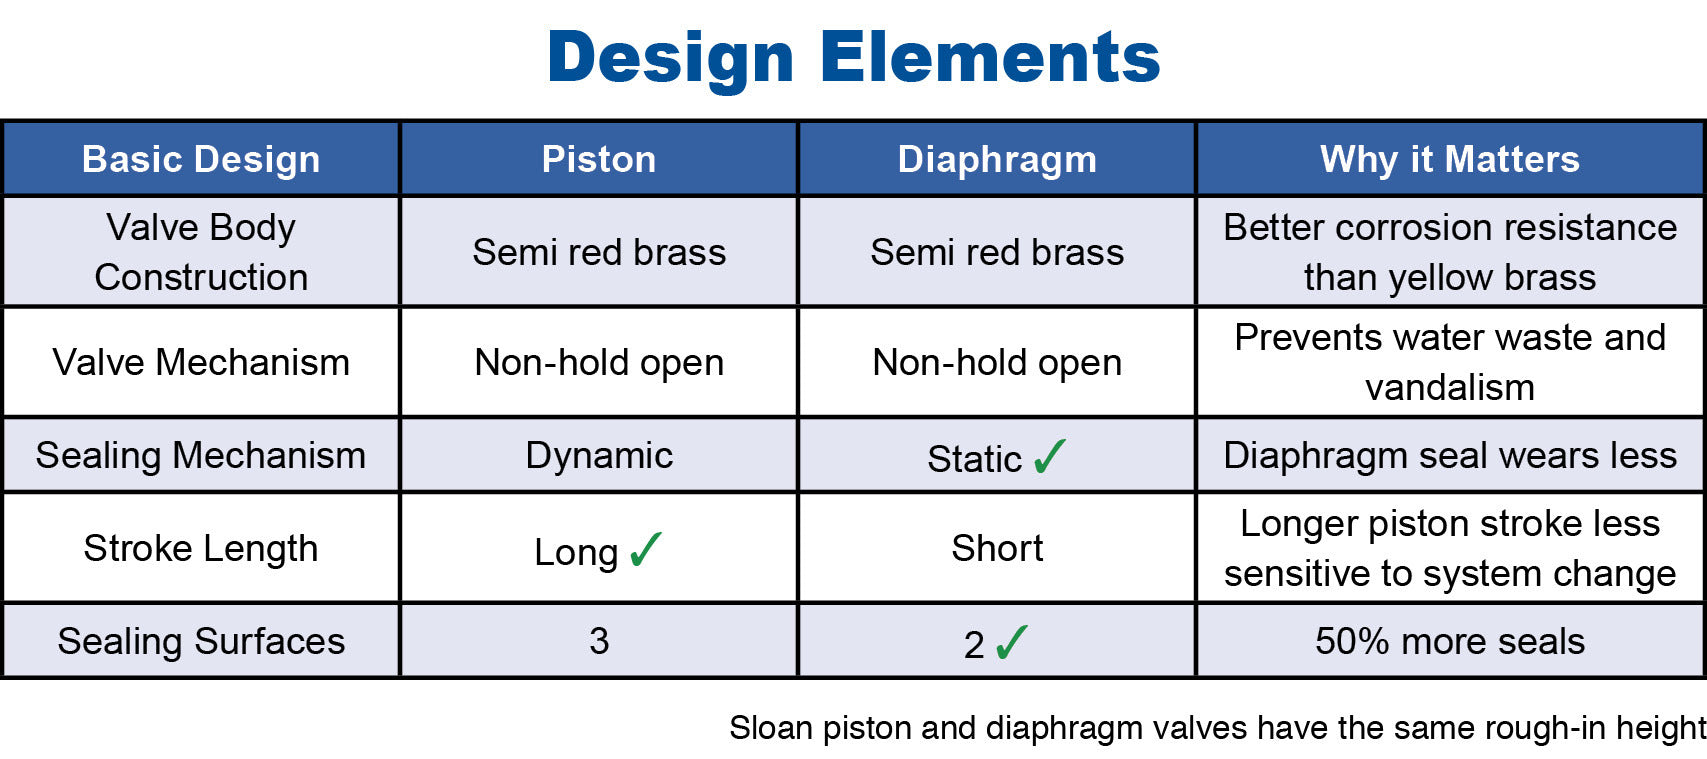 Sloan valve design